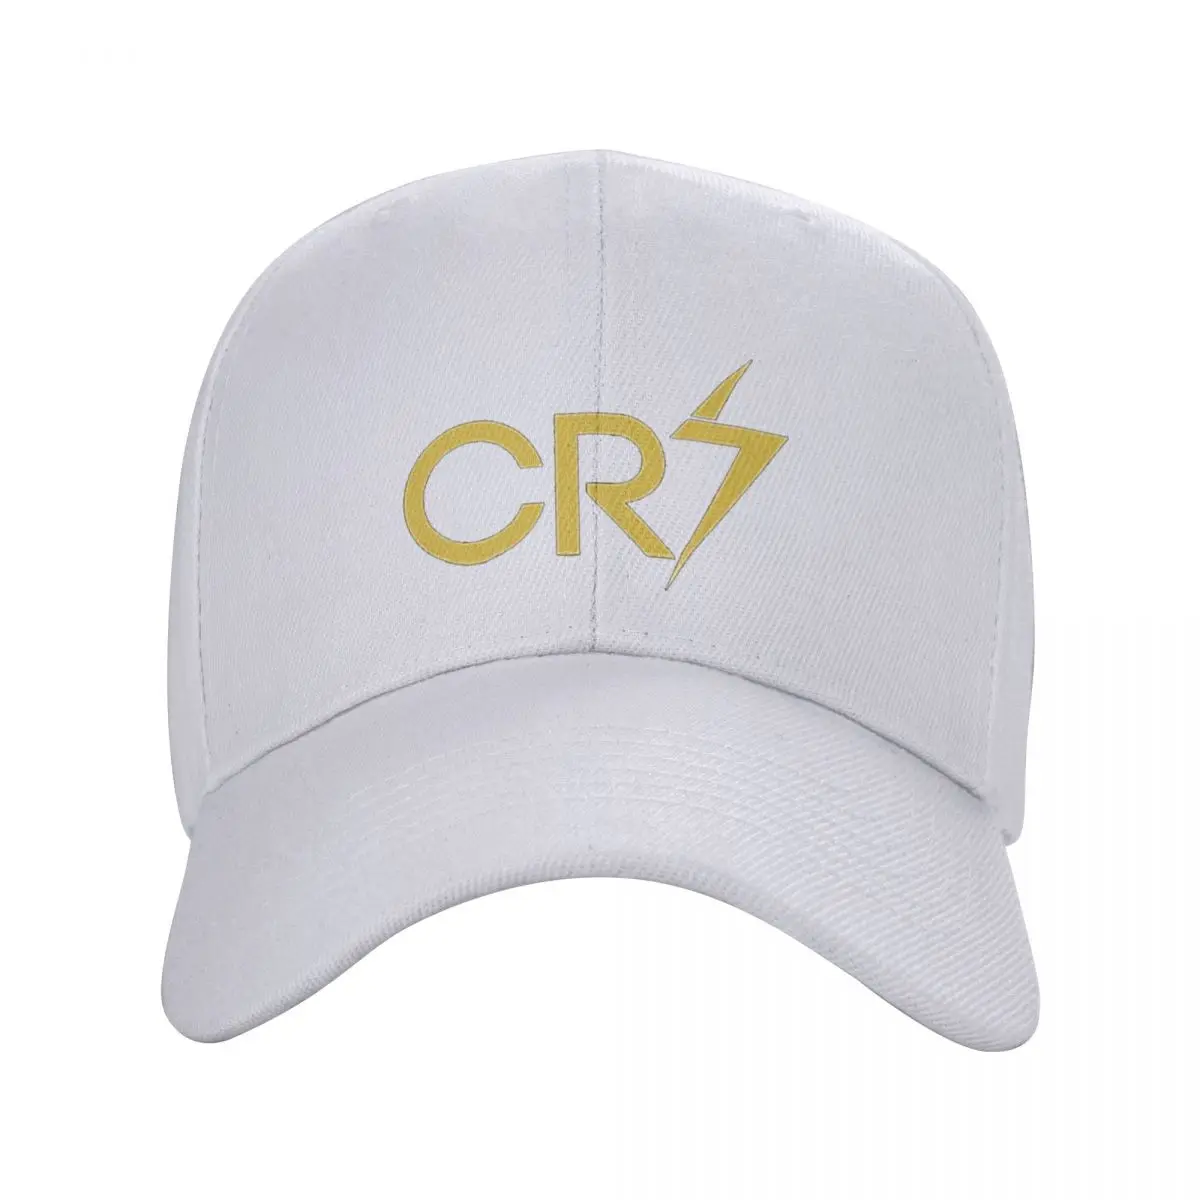 CR7 Cristiano Ronaldo Sepci de Baseball Snapback Moda Pălării de Baseball Respirabil Casual în aer liber Unisex Personalizate Policromie . ' - ' . 0